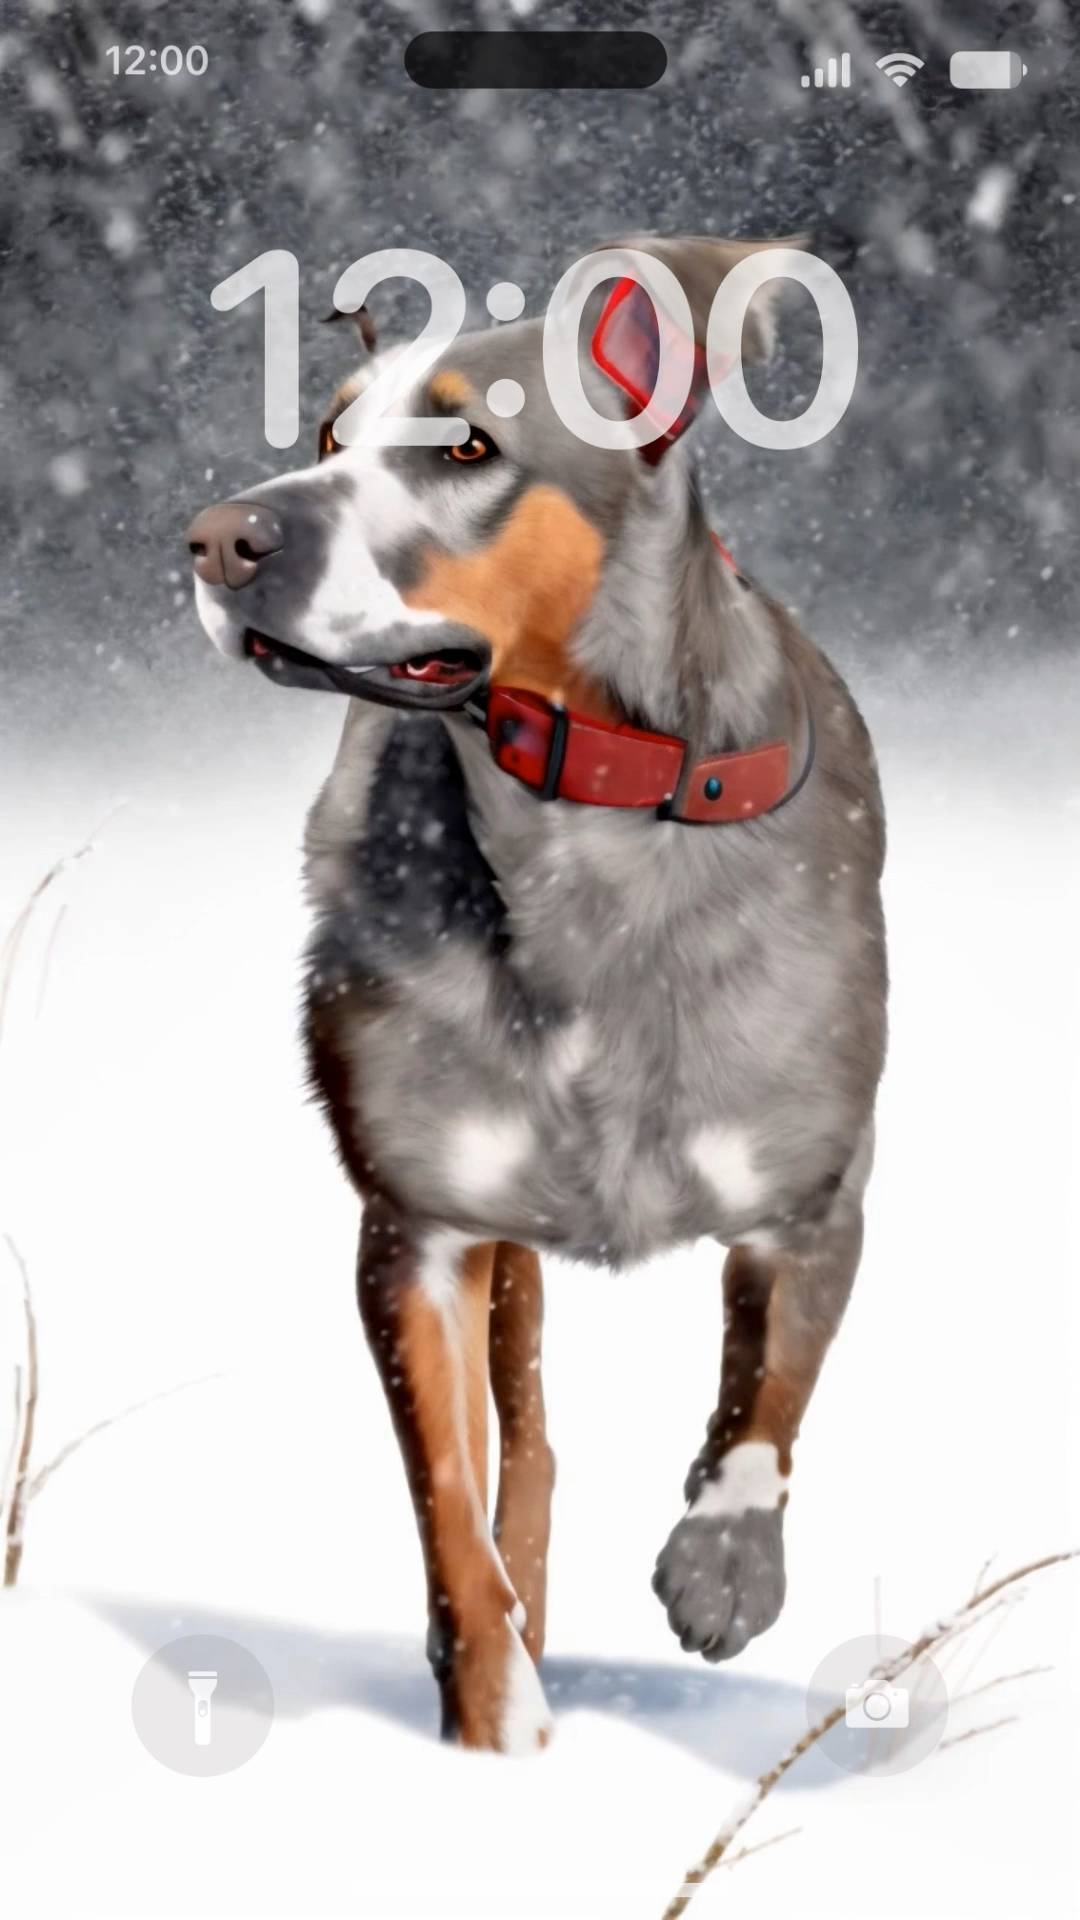 Dog in snowy day Živá tapeta[5xB6MA3AgnLP6CmmZGAL]